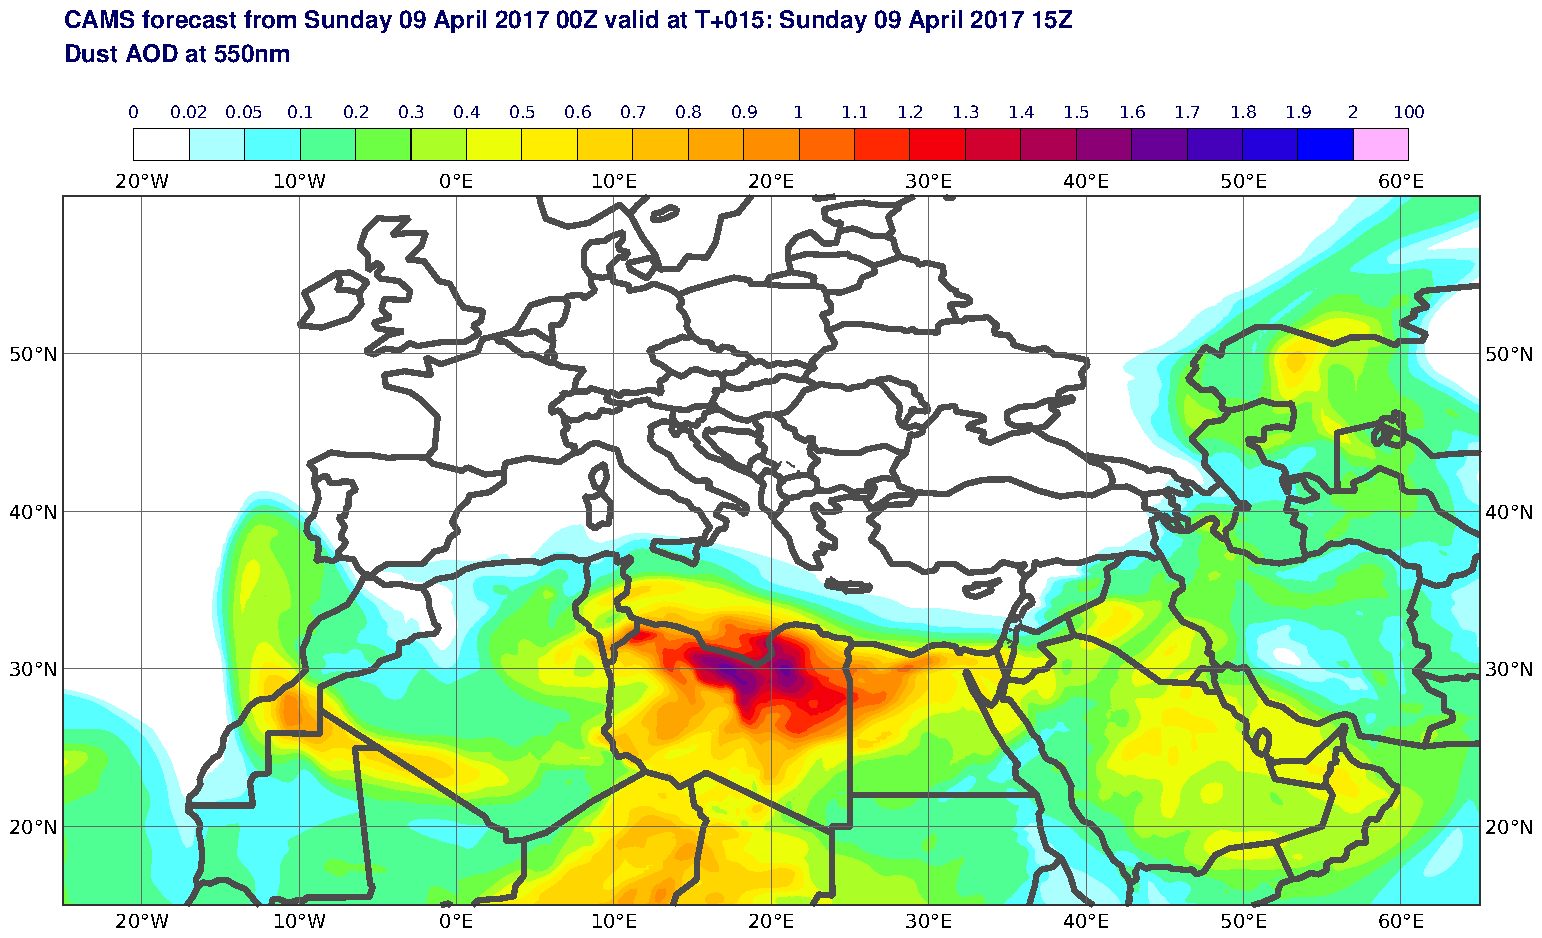 Dust AOD at 550nm valid at T15 - 2017-04-09 15:00